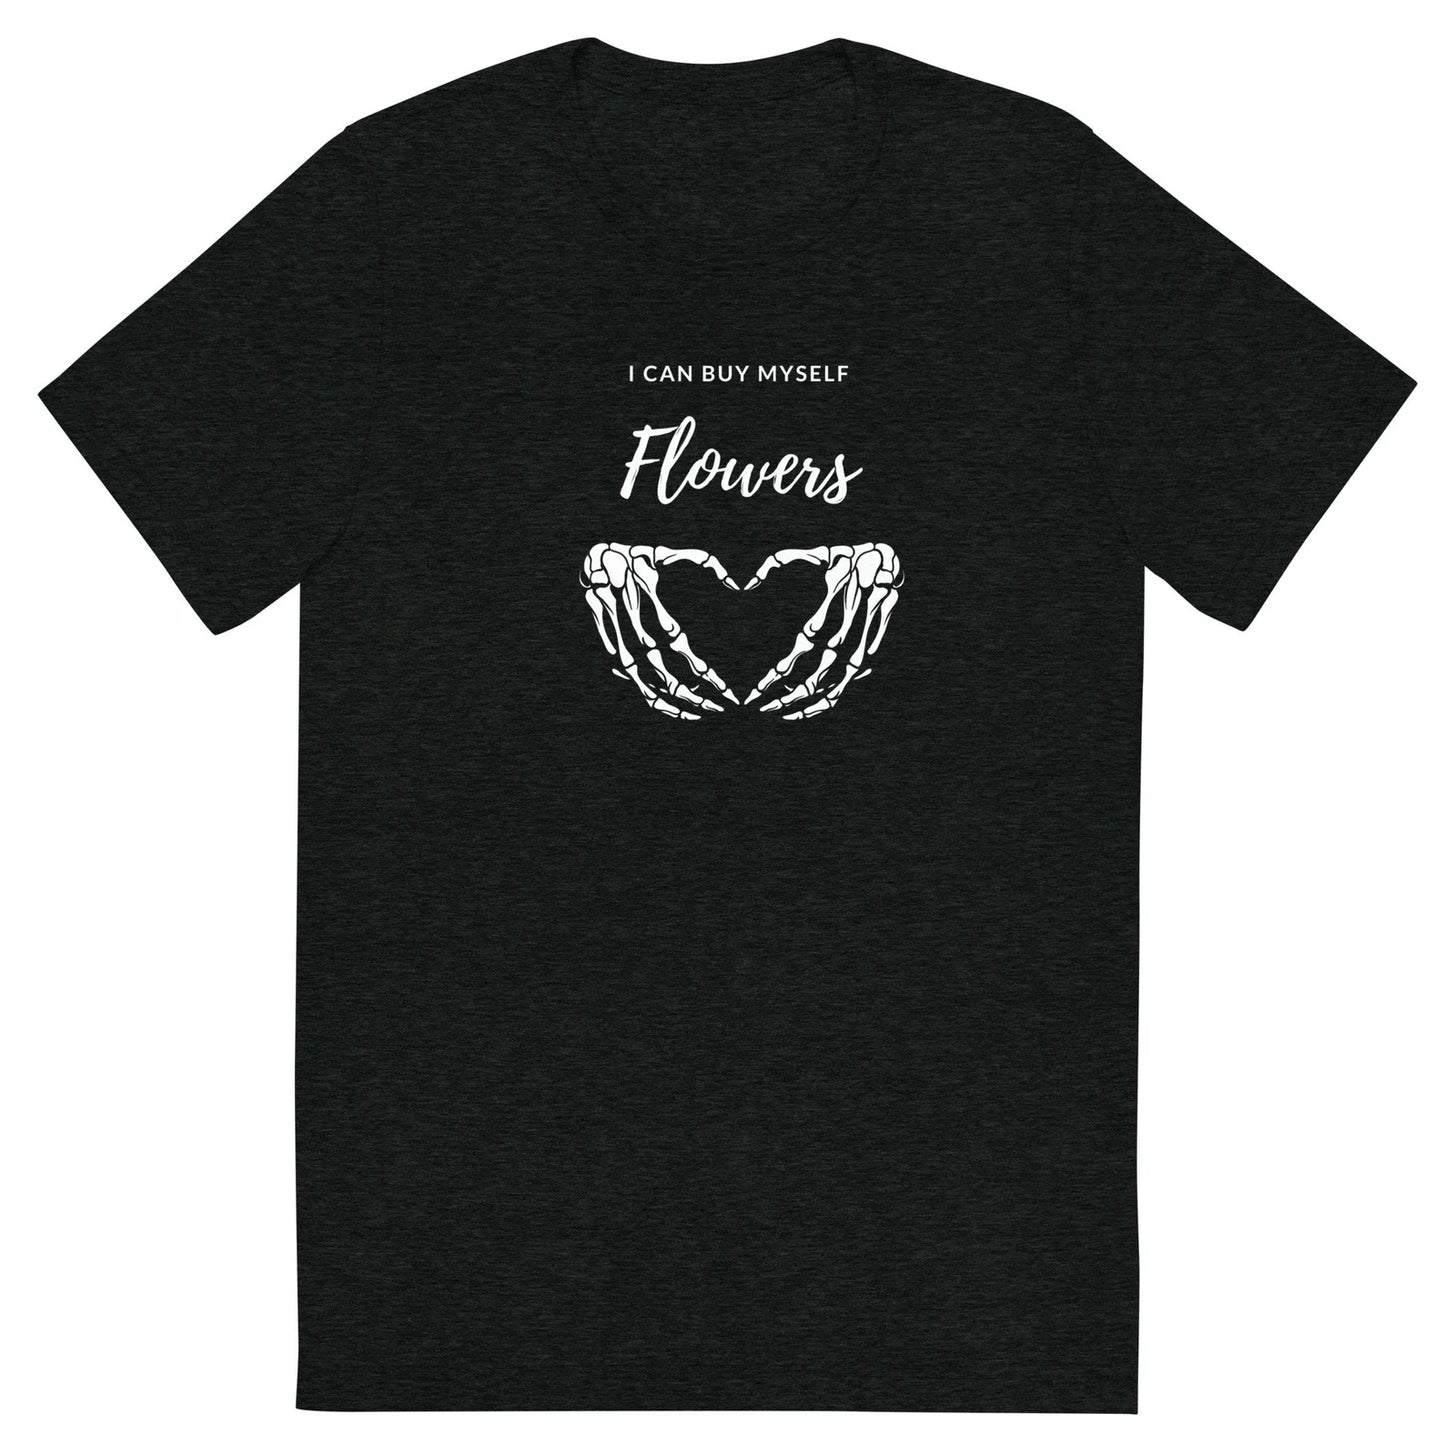 I can buy myself flowers Short sleeve t-shirt